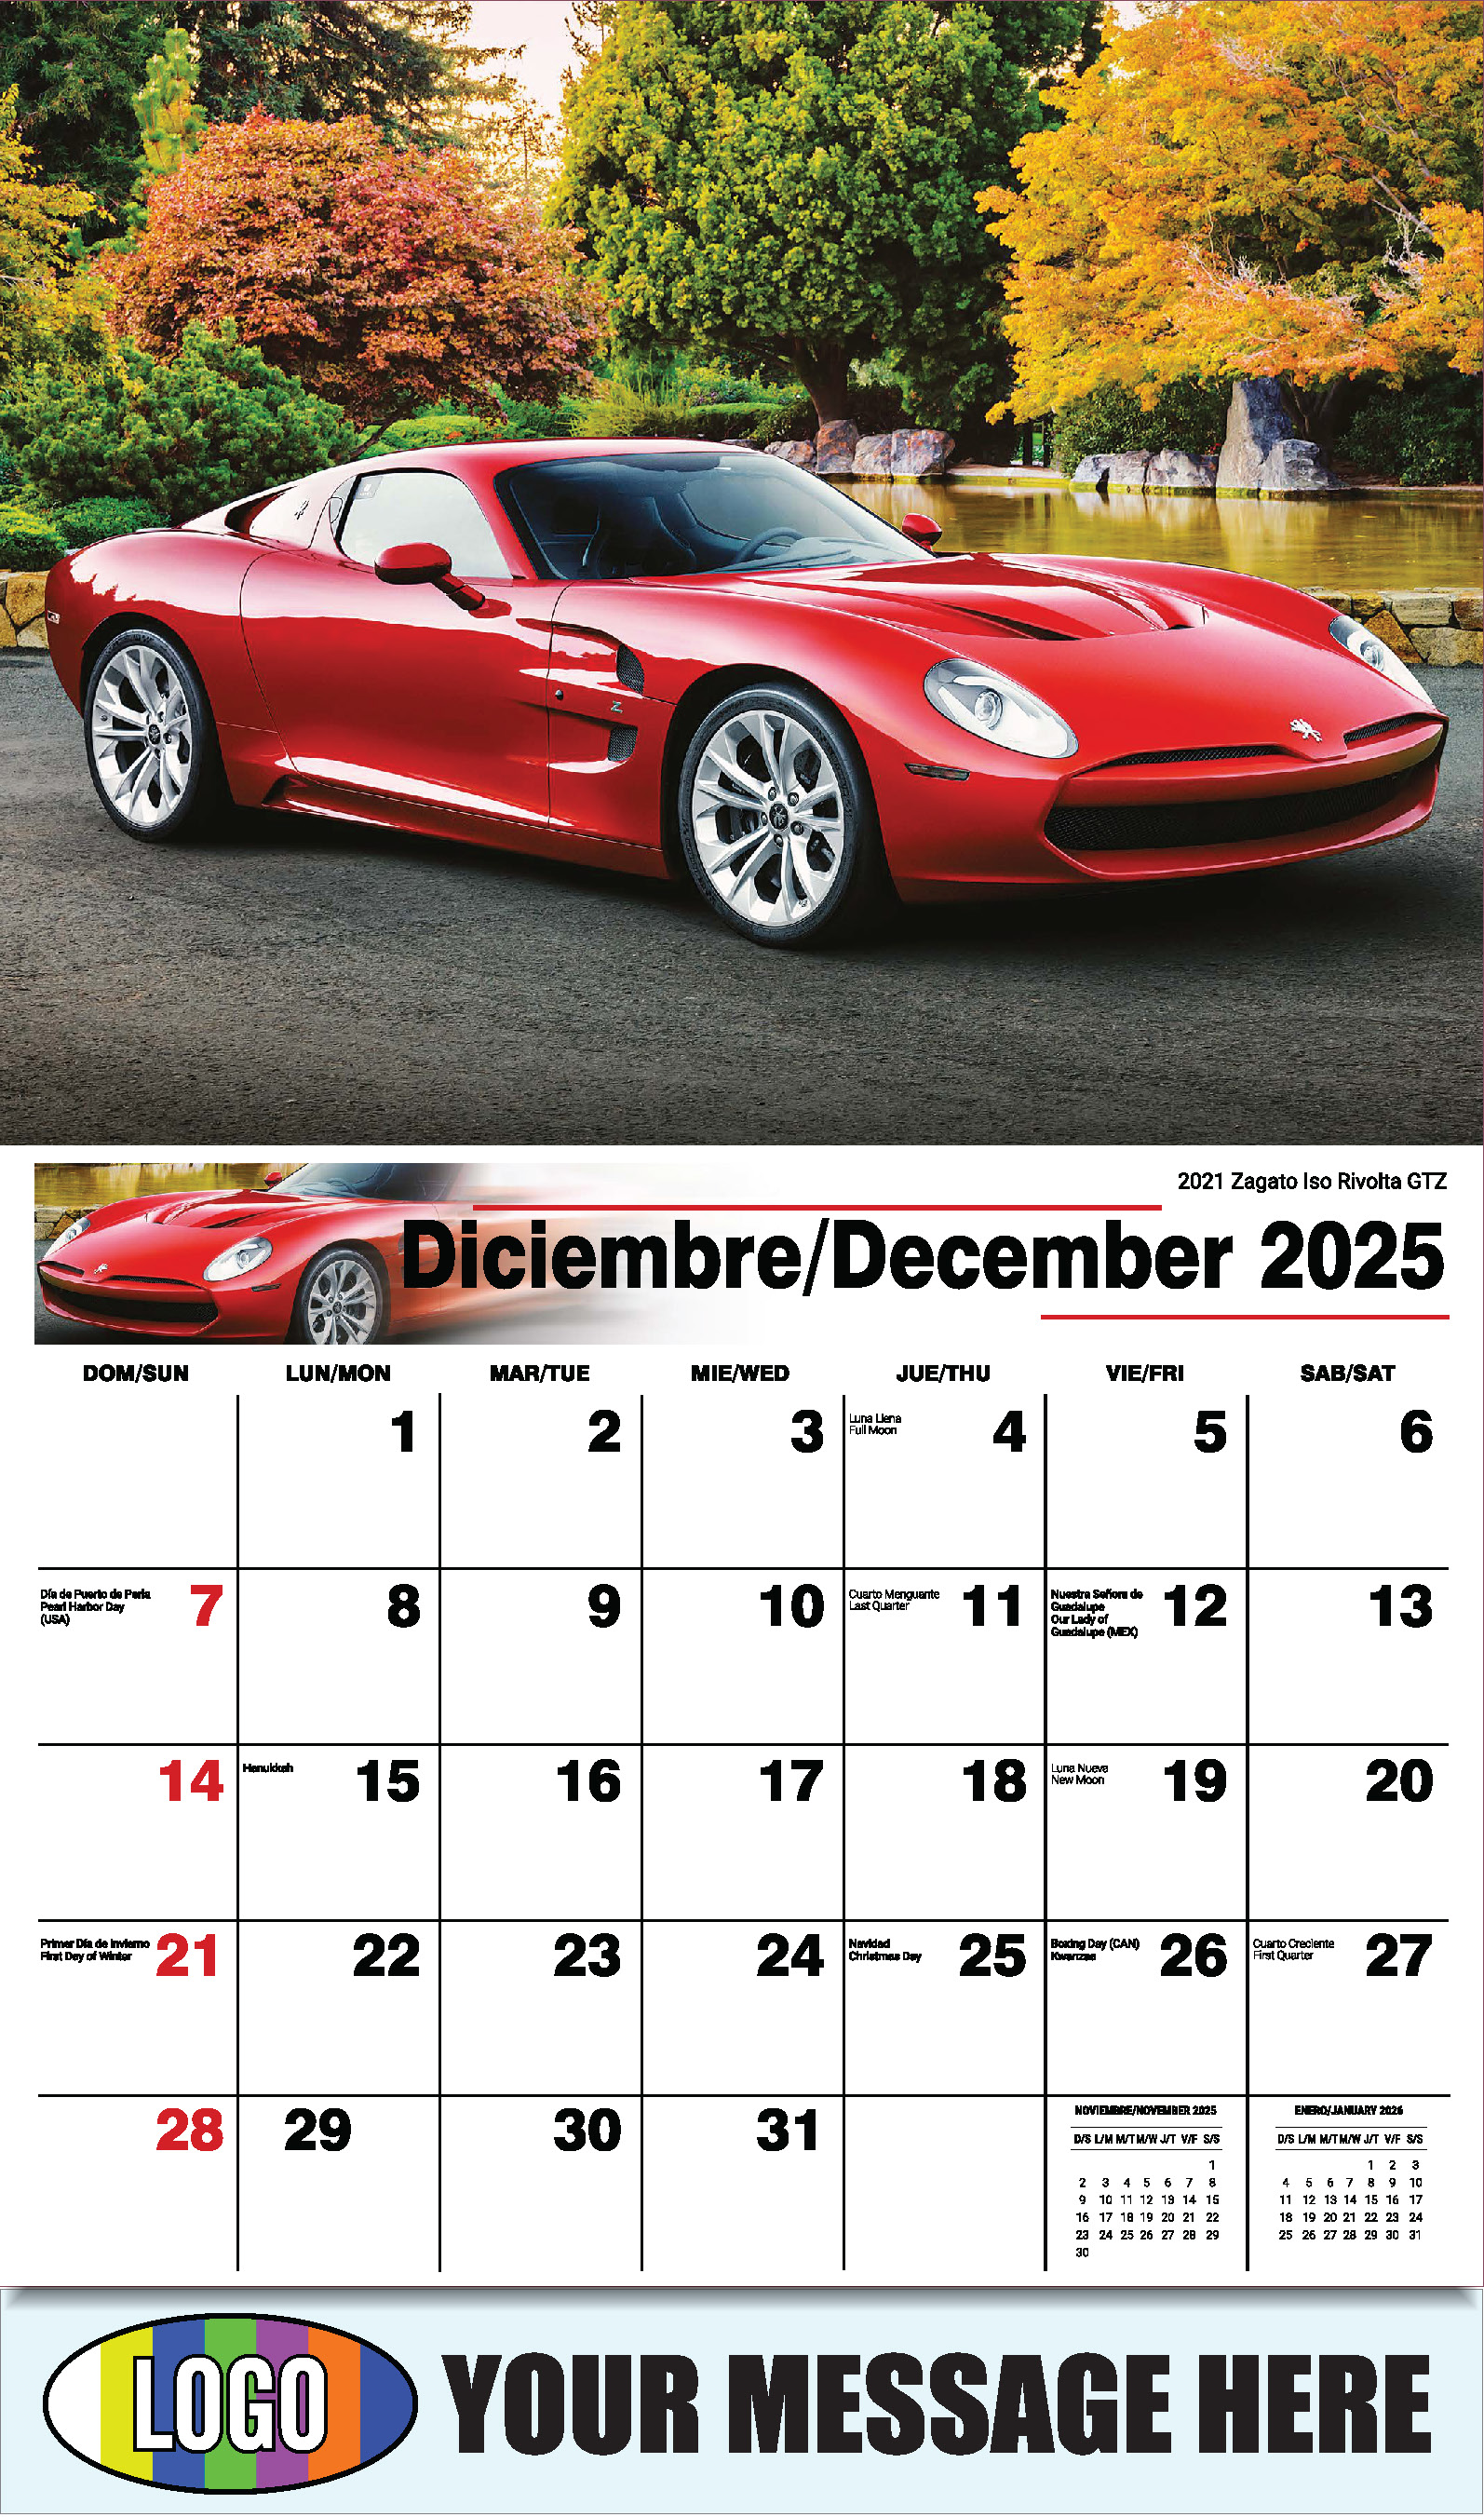 Exotic Cars 2025 Bilingual Automotive Business Promotional Calendar - December